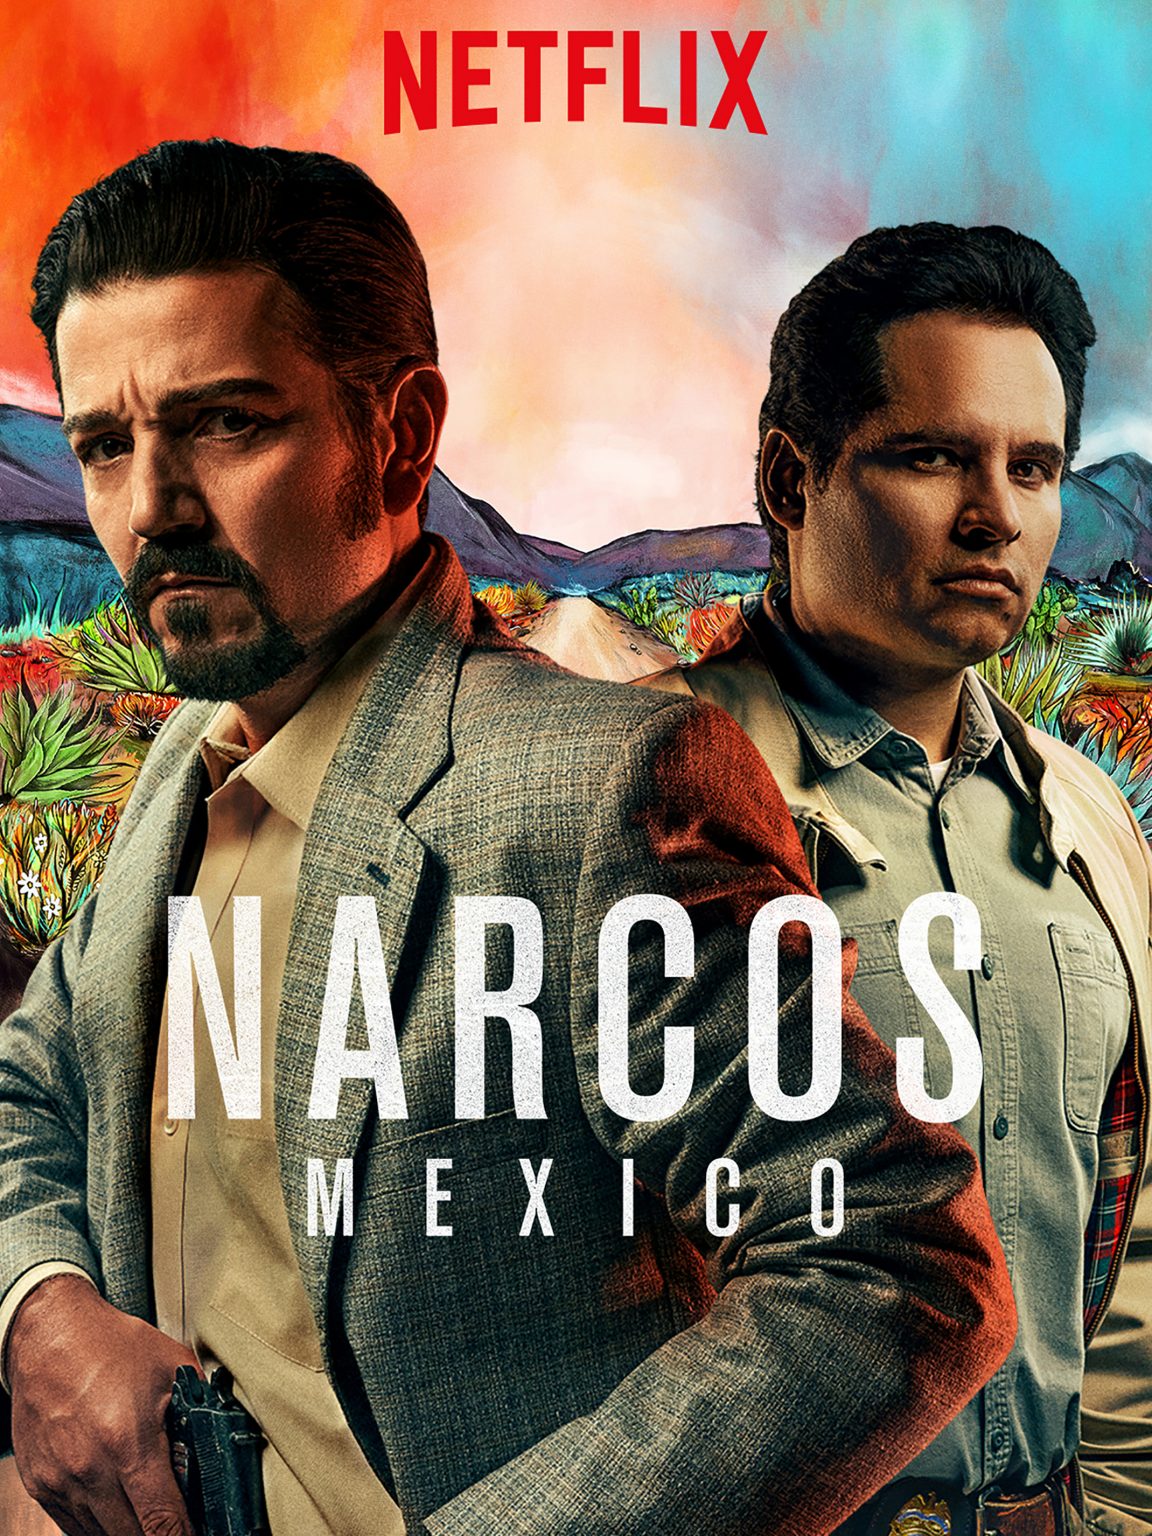 Narcos Mexico Cast And Characters Netflix Netflix Dramas Netflix My